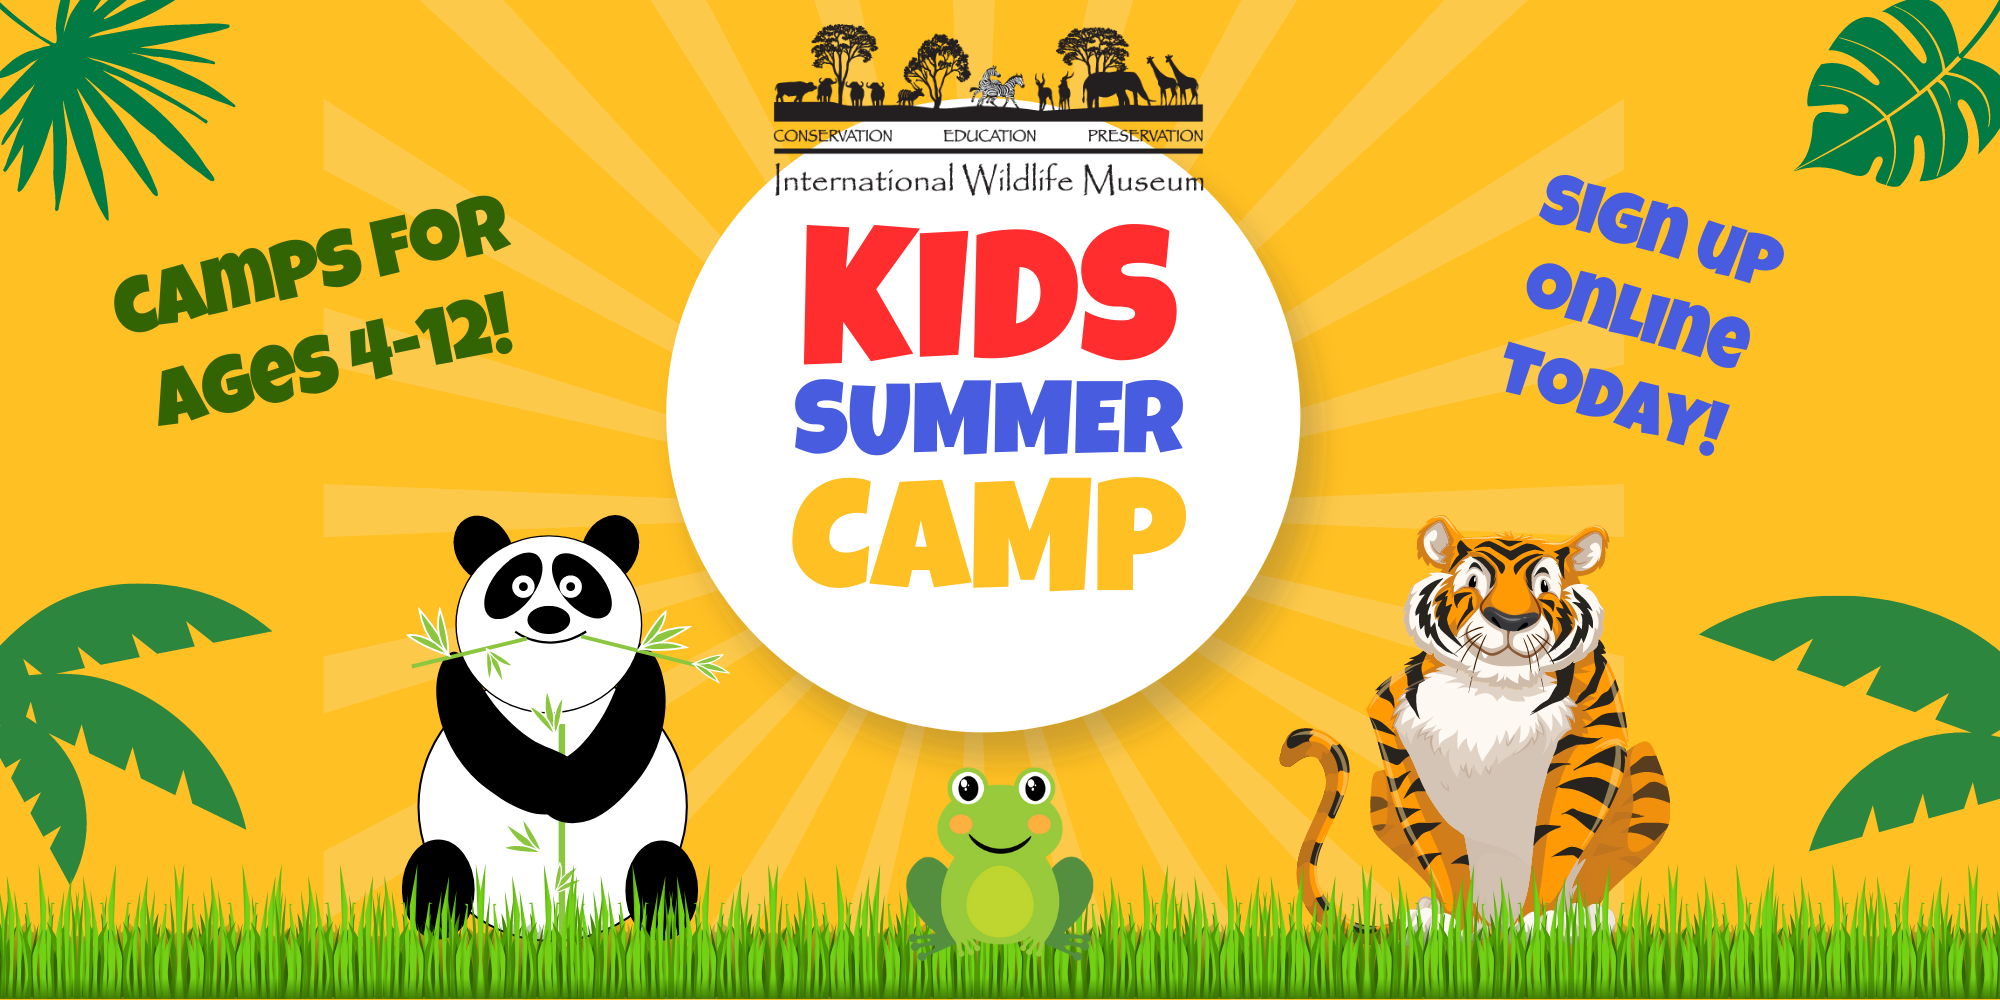 Kids Summer Camps promotional image